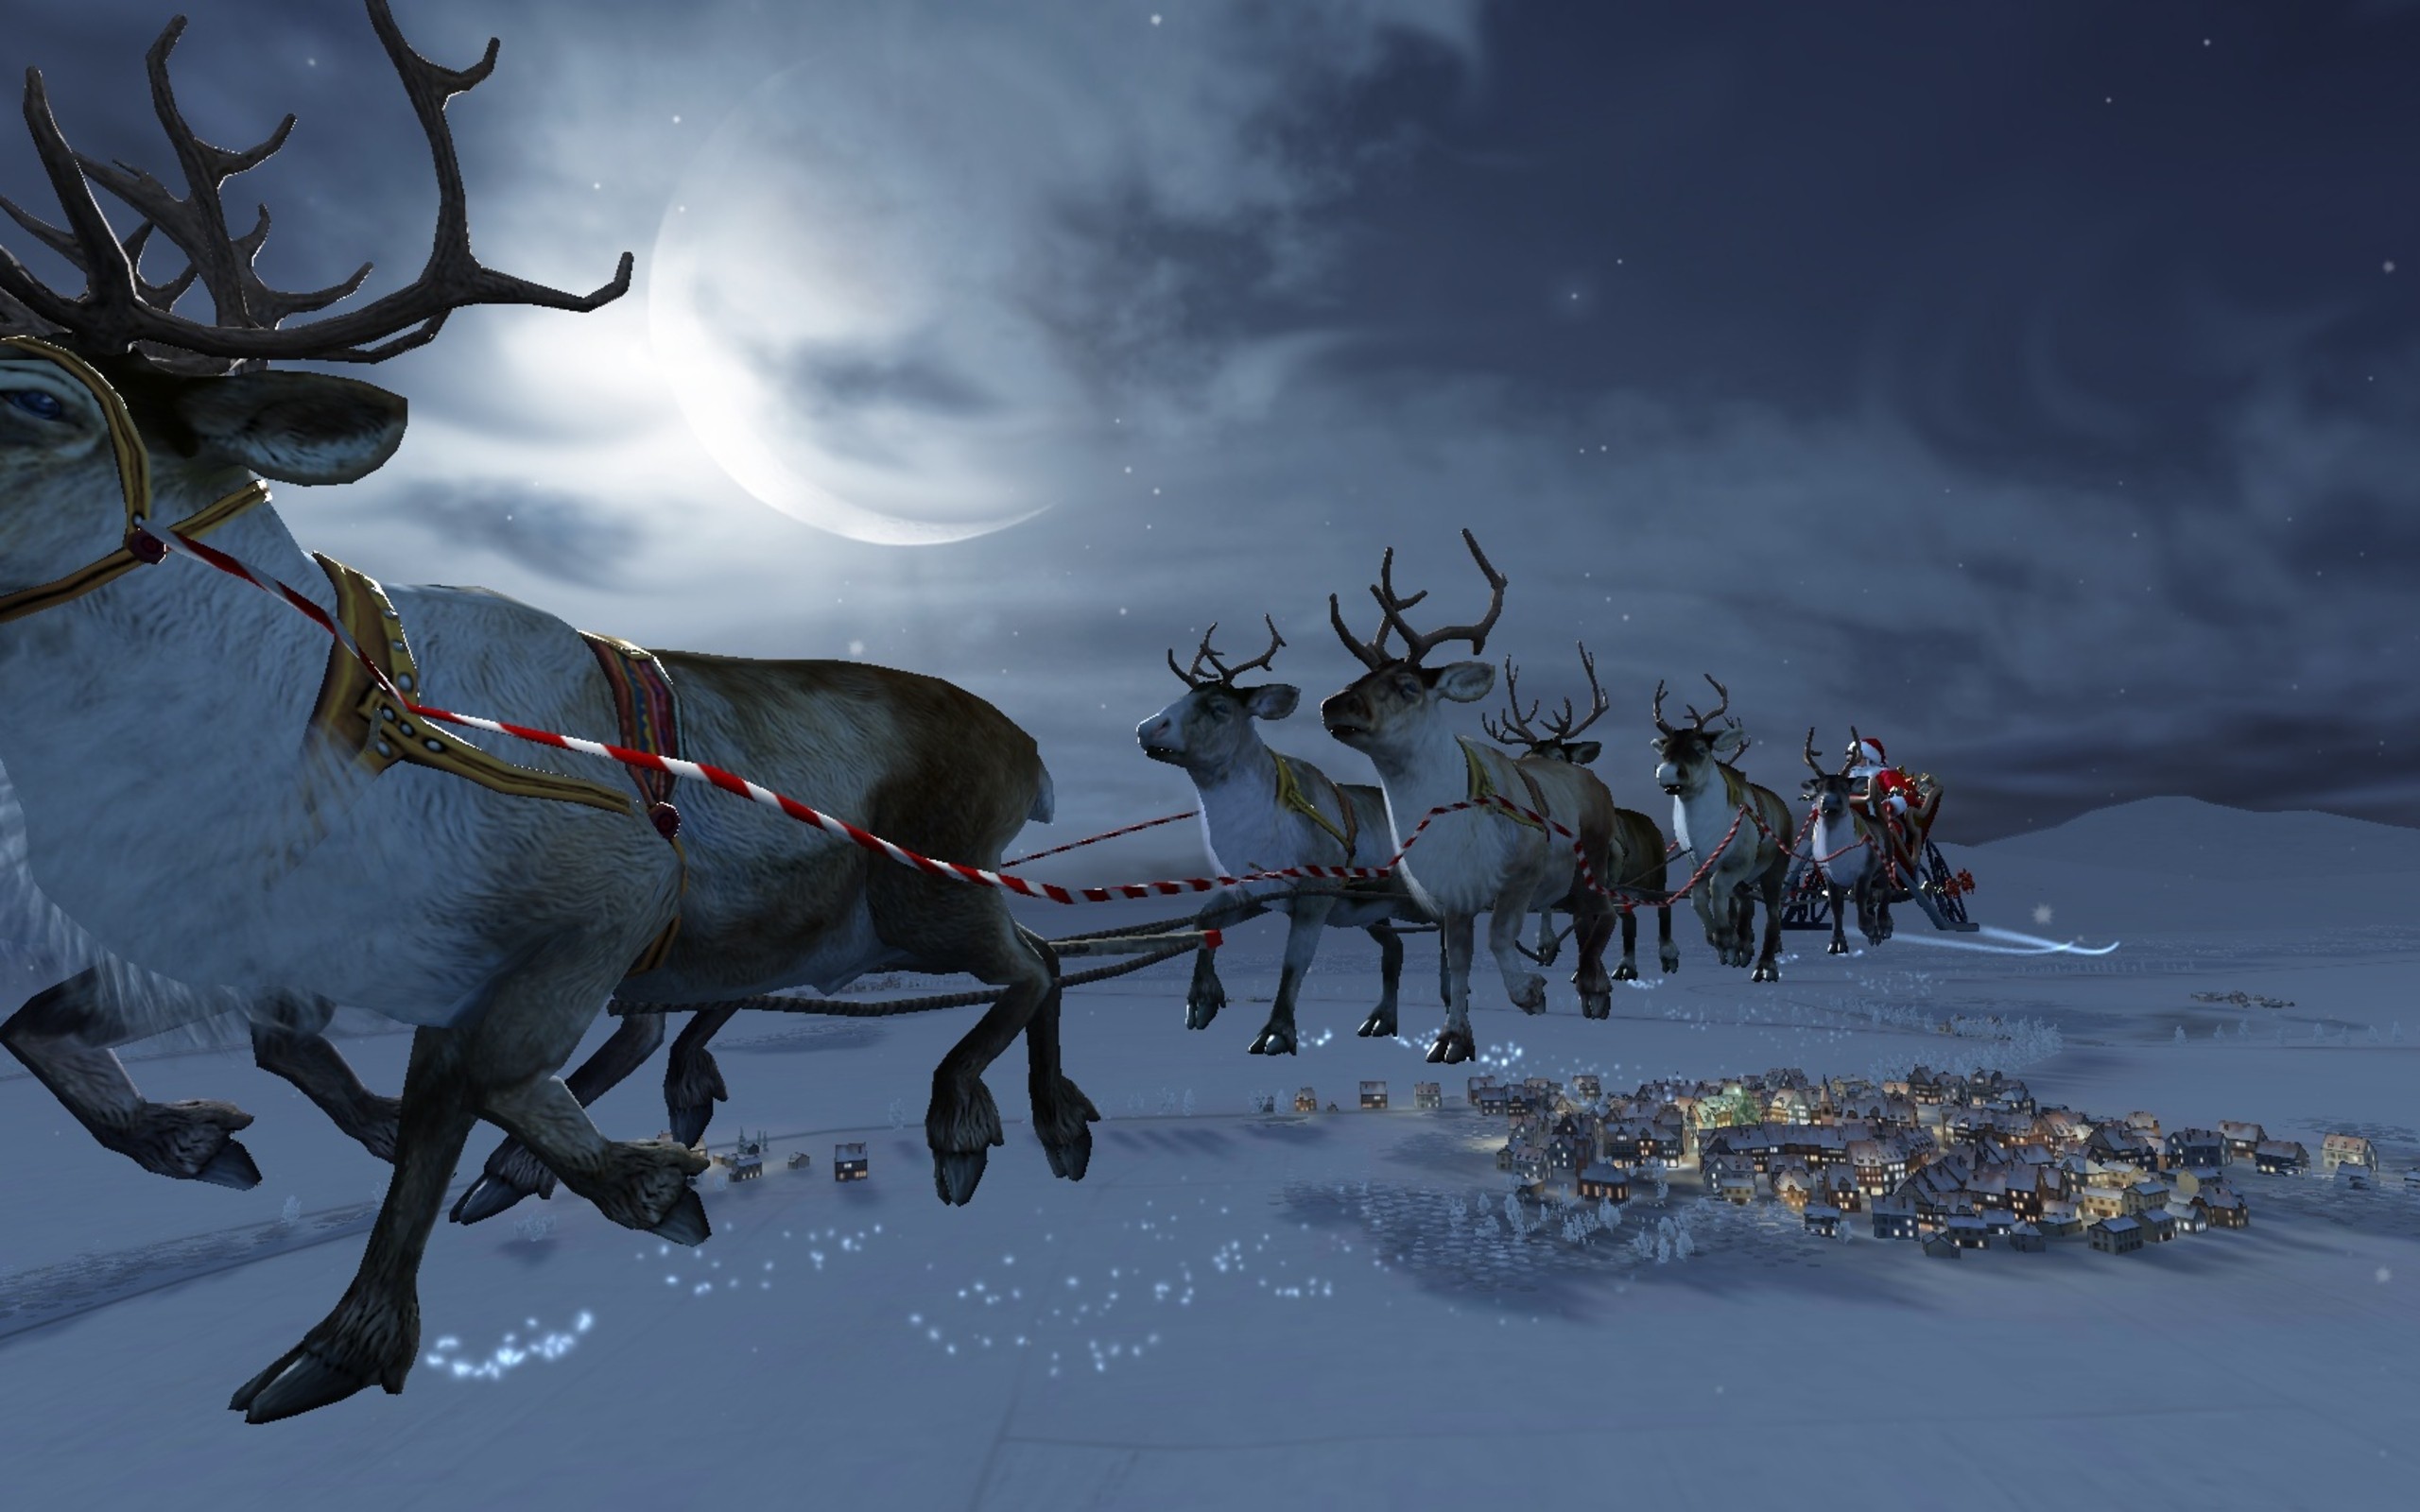 Santa Claus In His Sleigh Pulled By Reindeers Widescreen Wallpaper